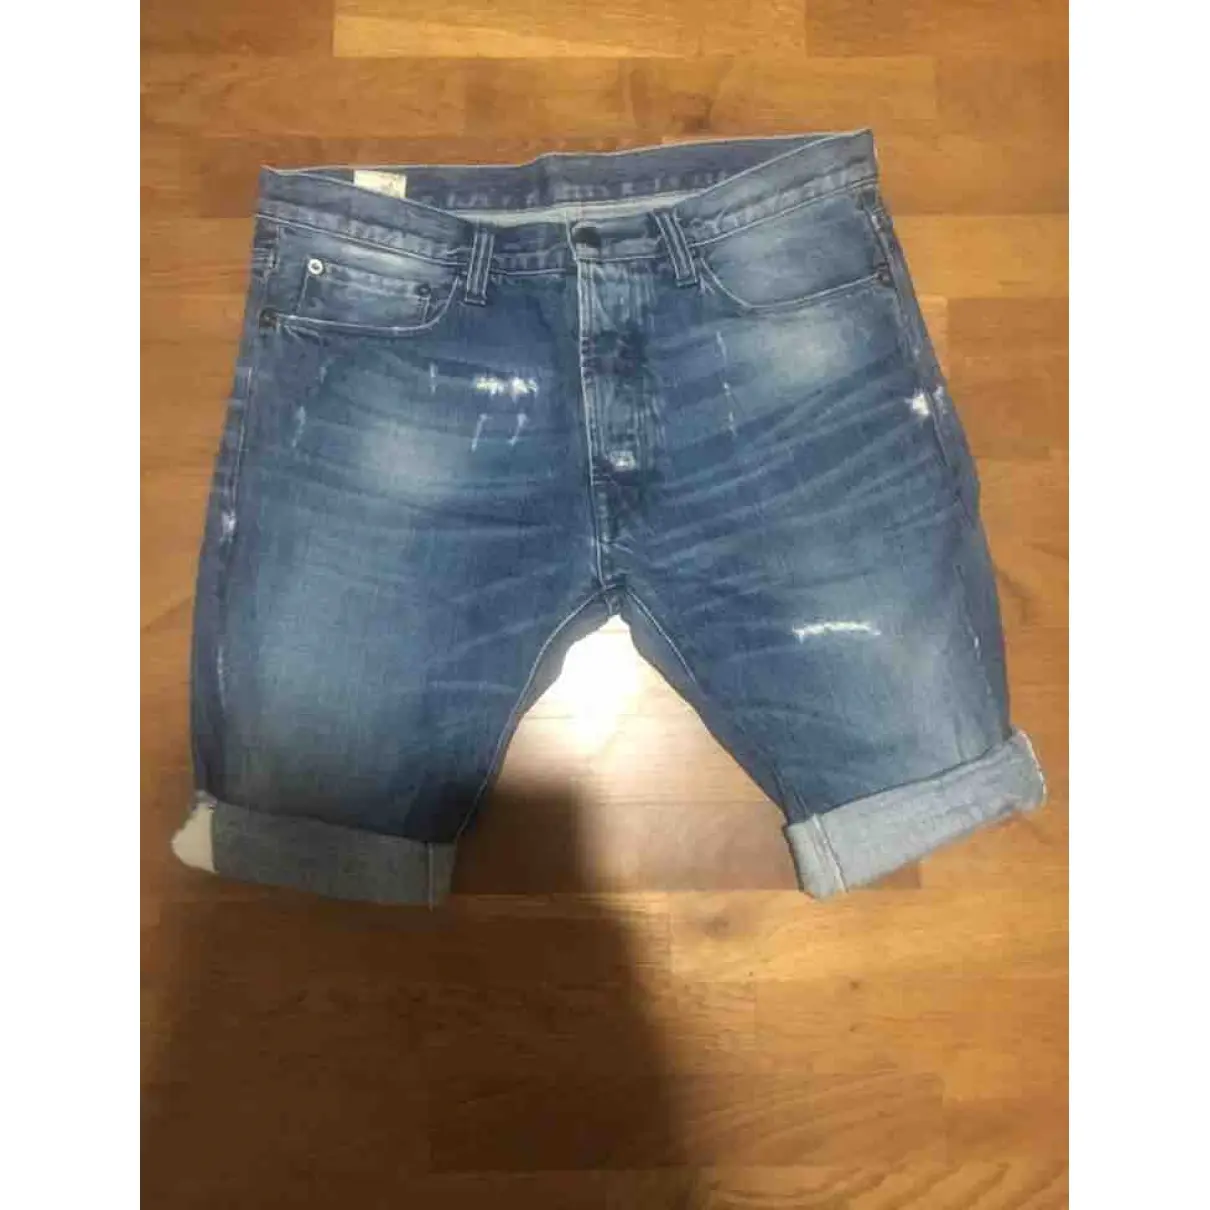 Buy Mauro Grifoni Short jeans online